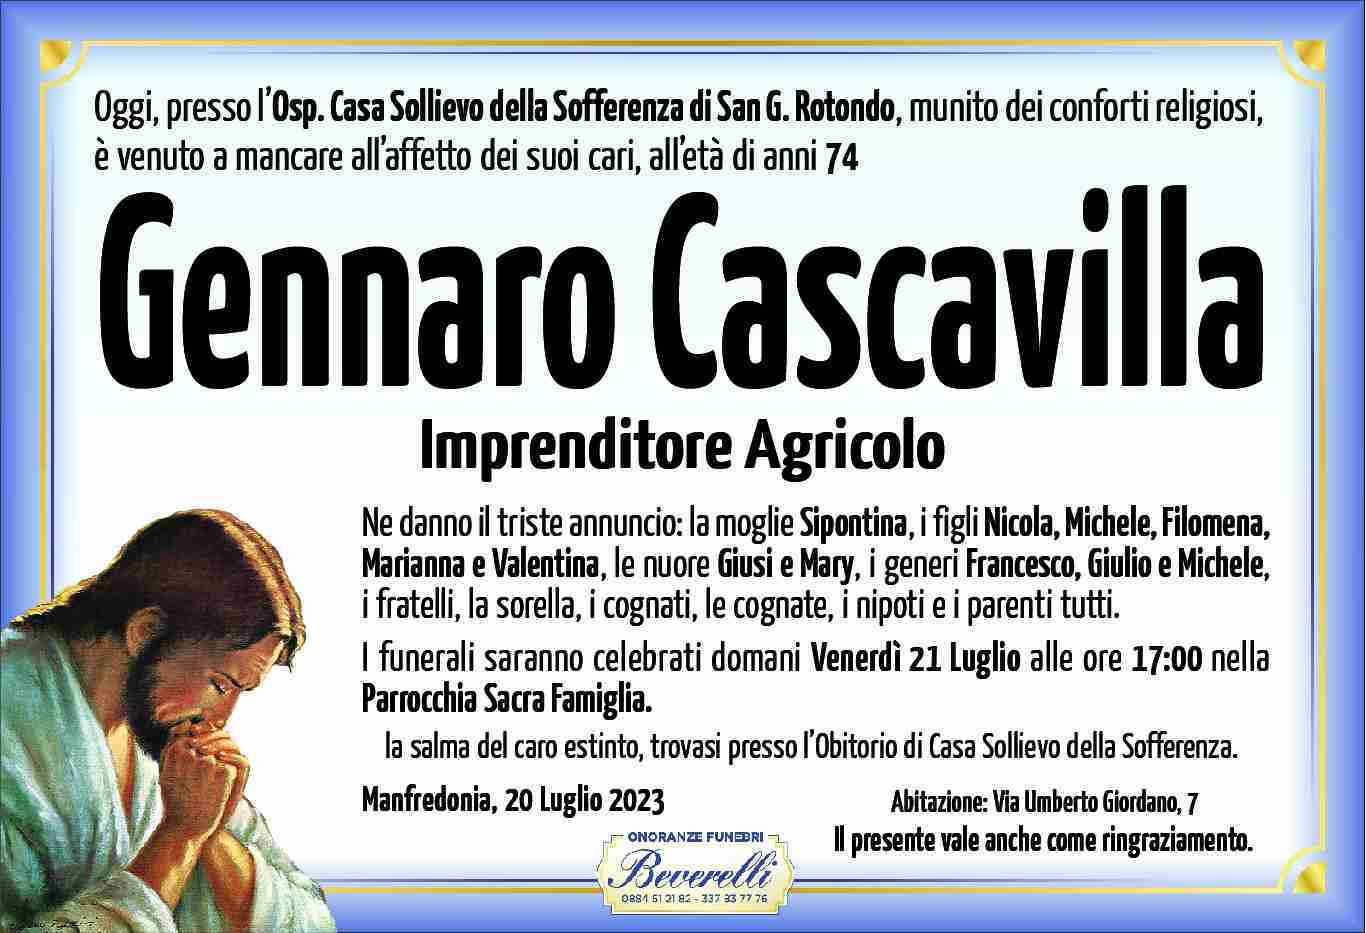 Gennaro Cascavilla